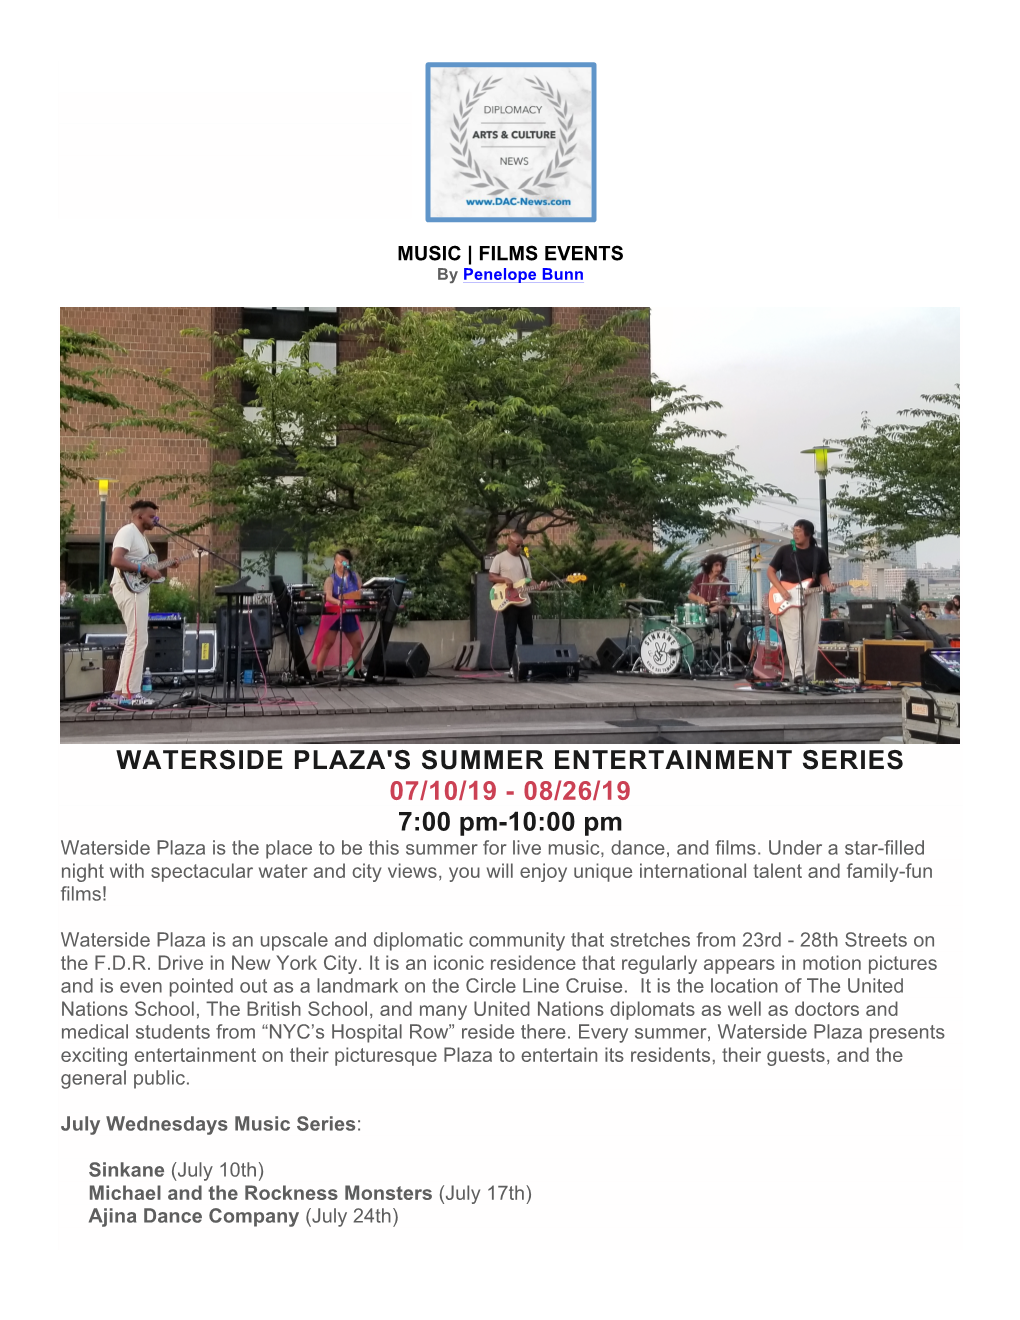 Waterside Plaza 2019 Summer Series